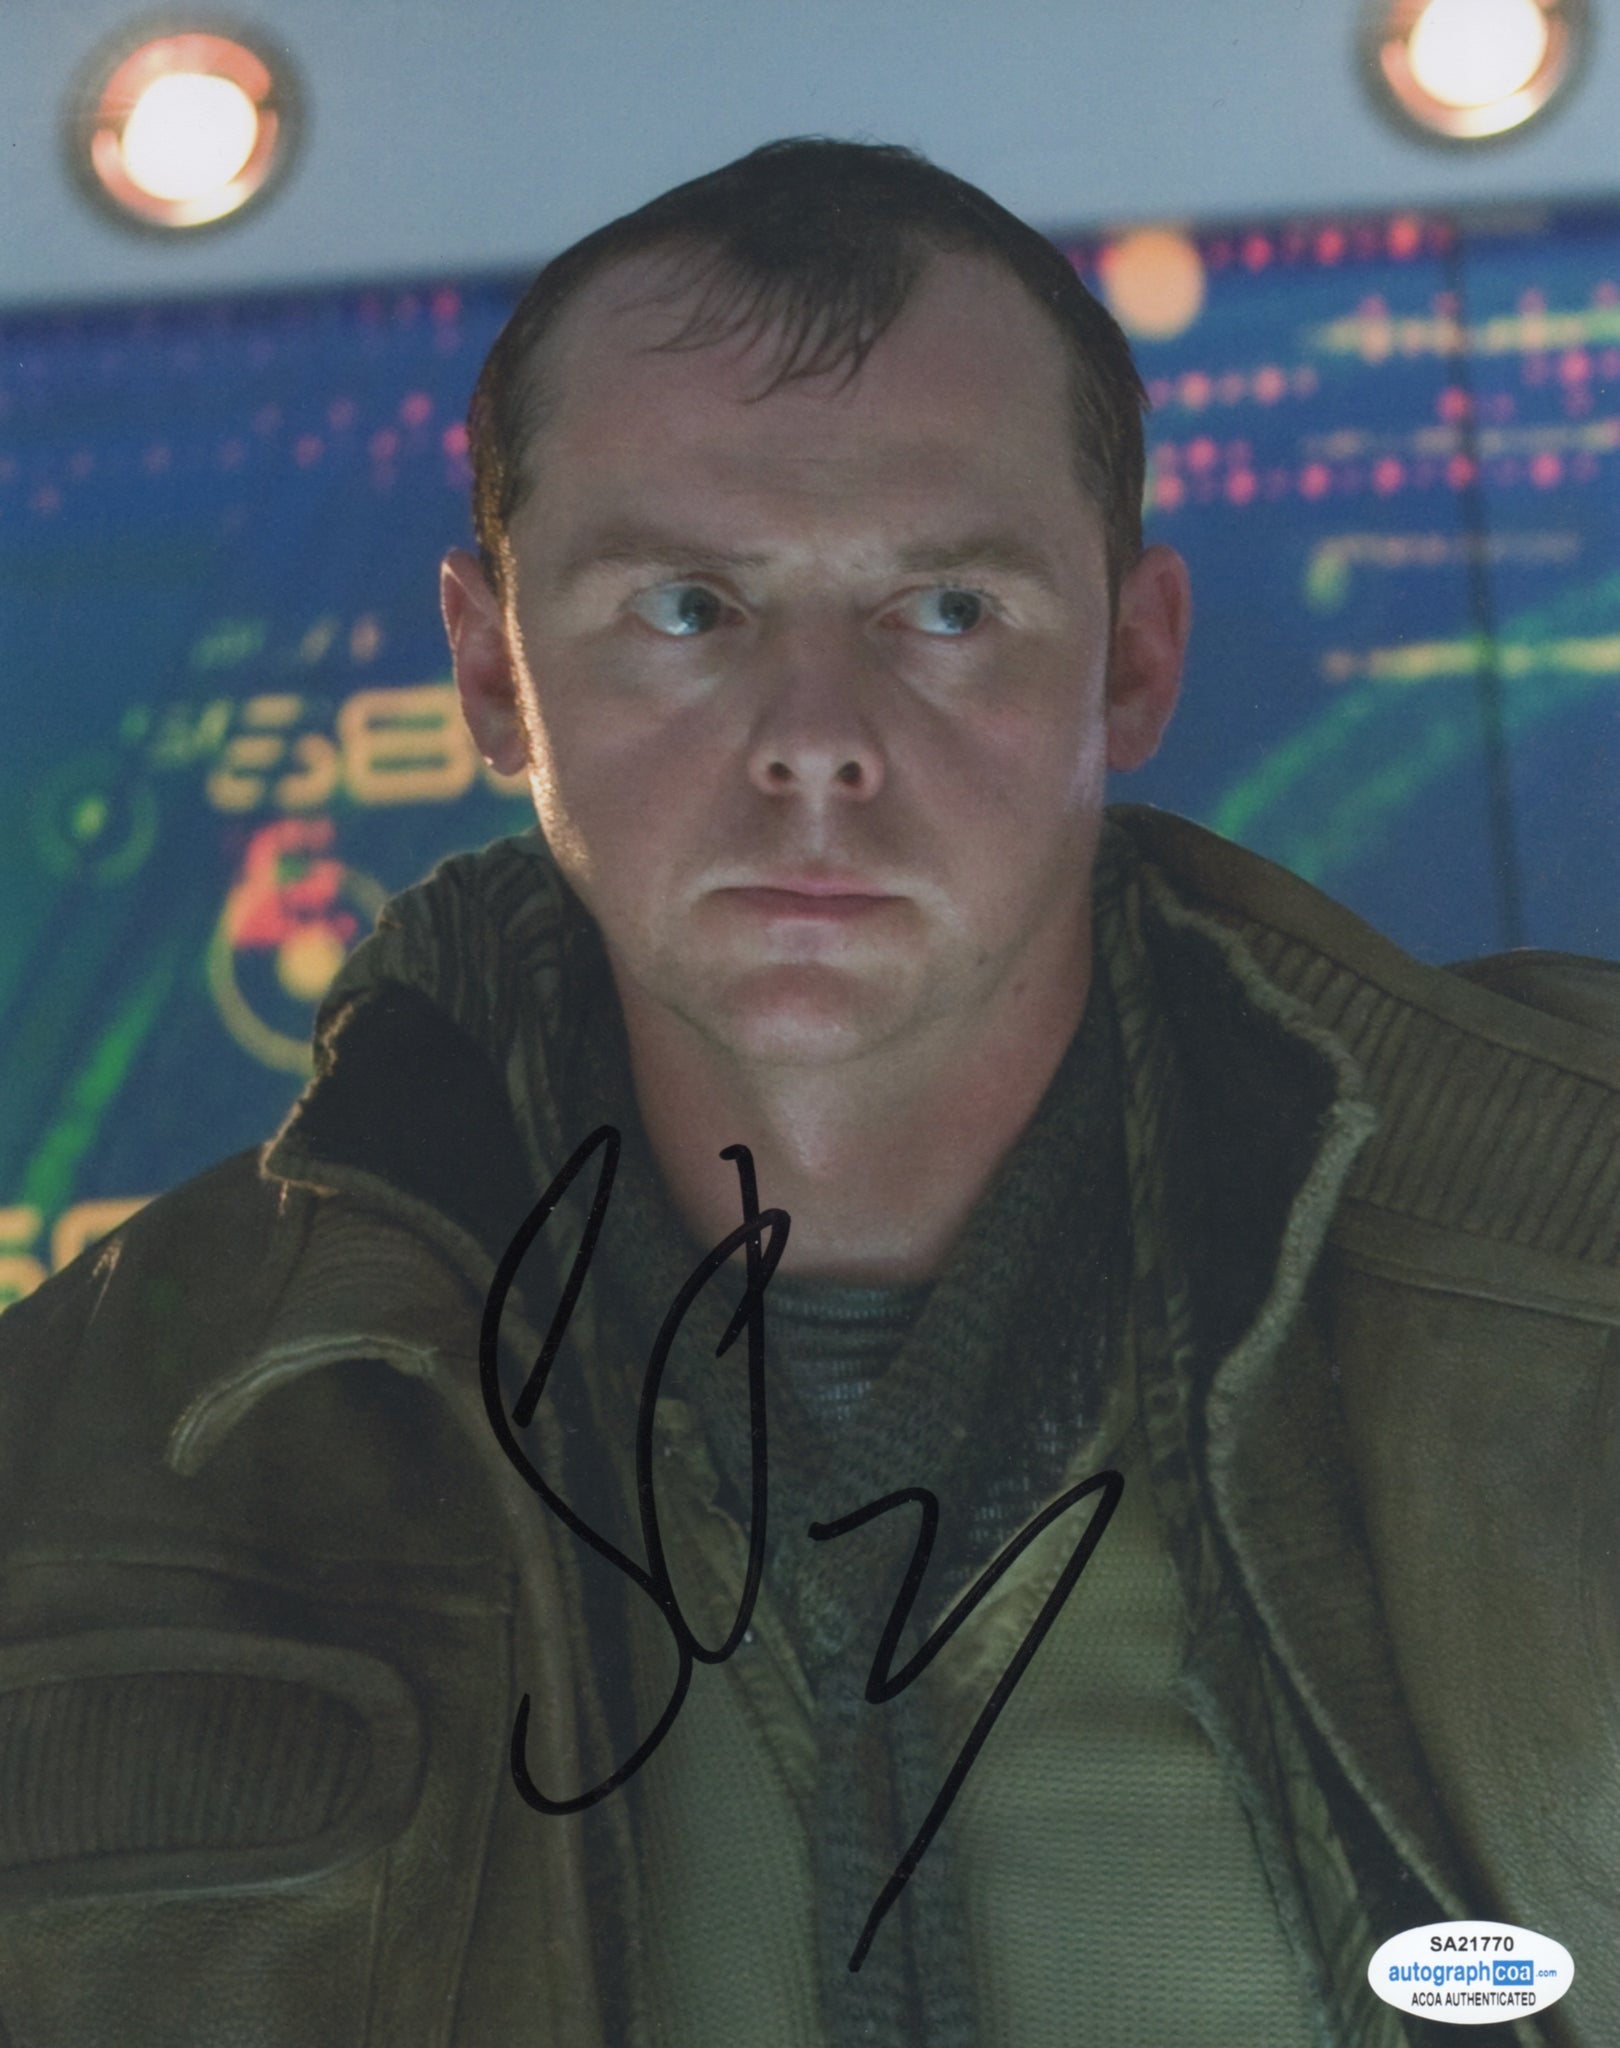 Simon Pegg Star Trek Signed Autograph 8x10 Photo ACOA #6 - Outlaw Hobbies Authentic Autographs